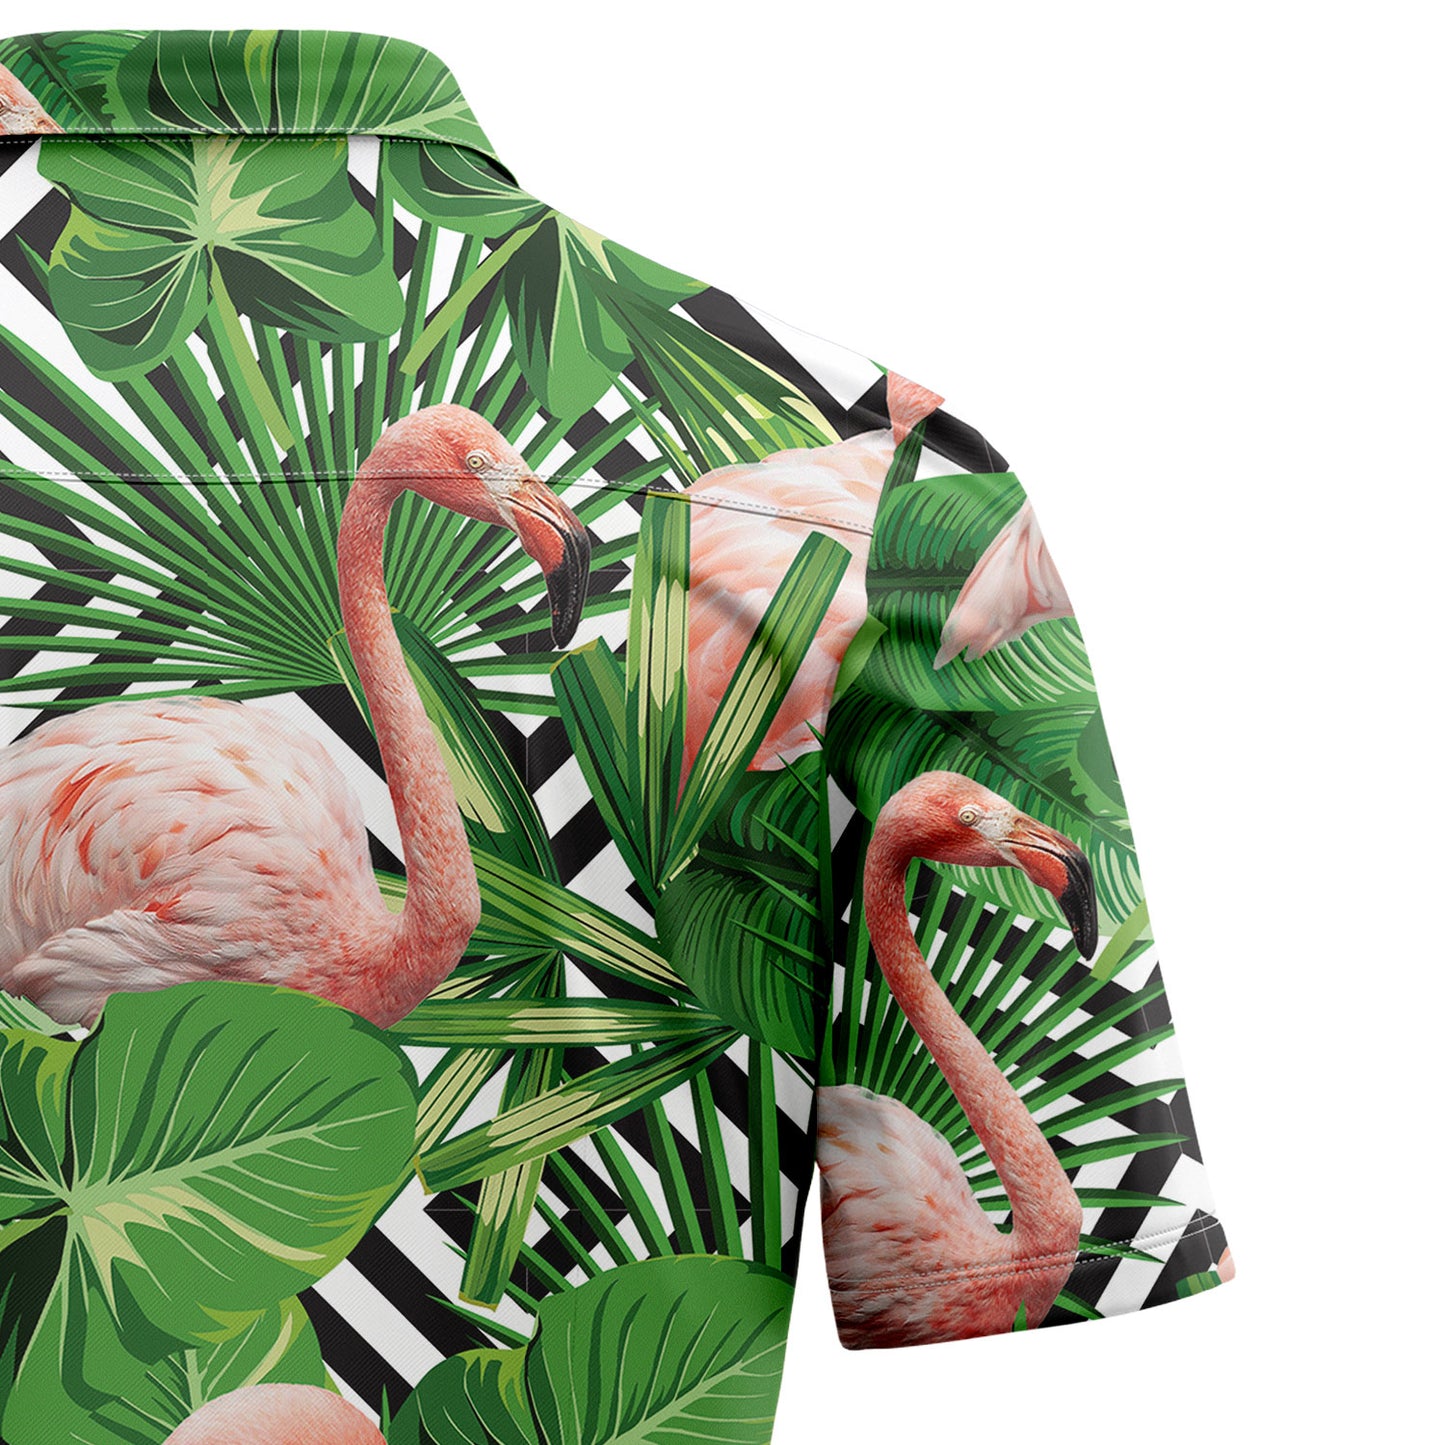 Summer exotic jungle tropical Flamingo H97075 - Hawaii Shirt